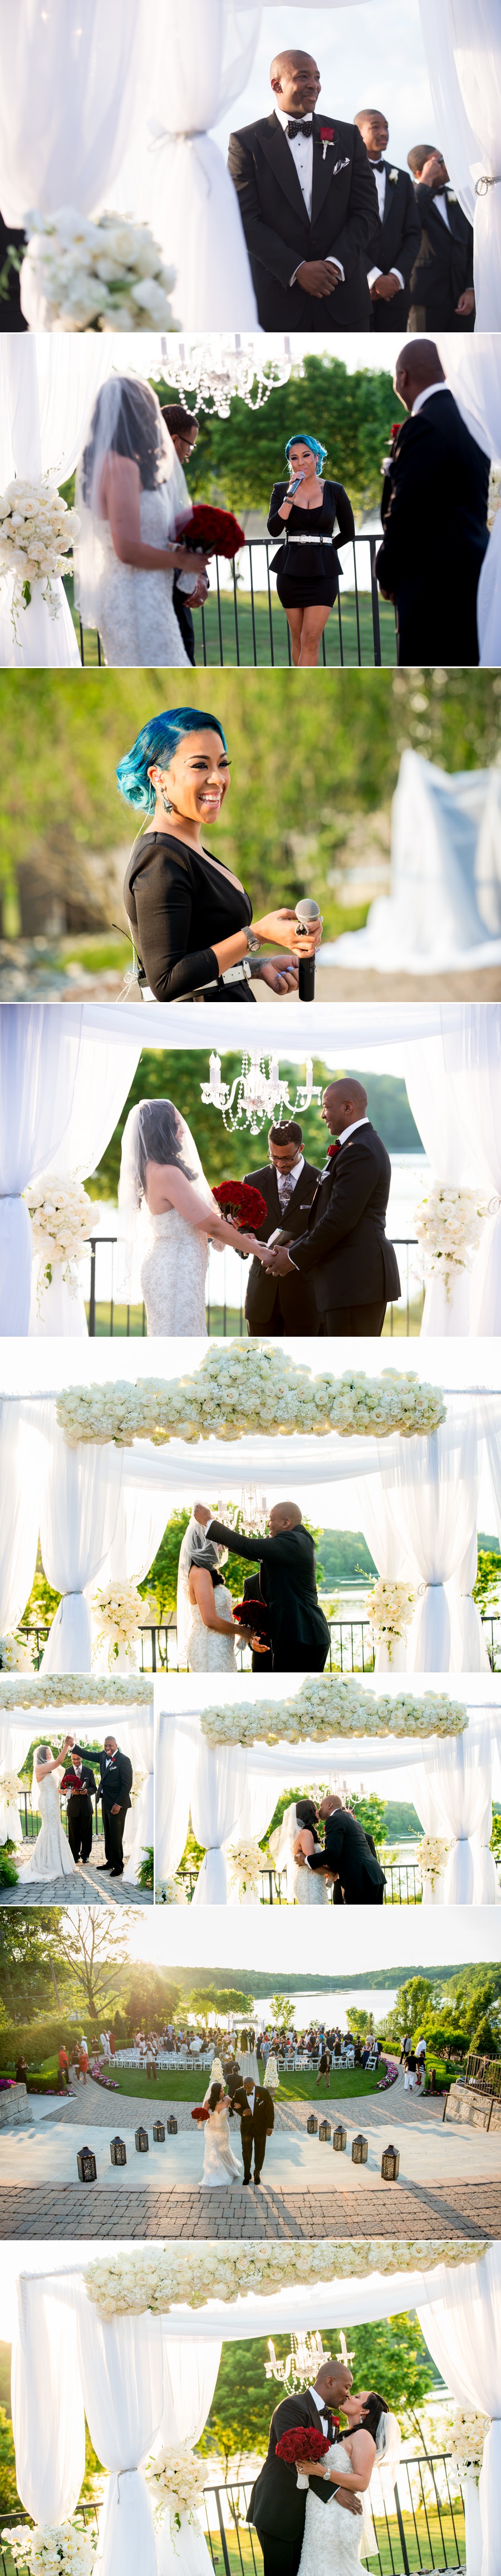 Tekia and Darrell Wedding Blog 4